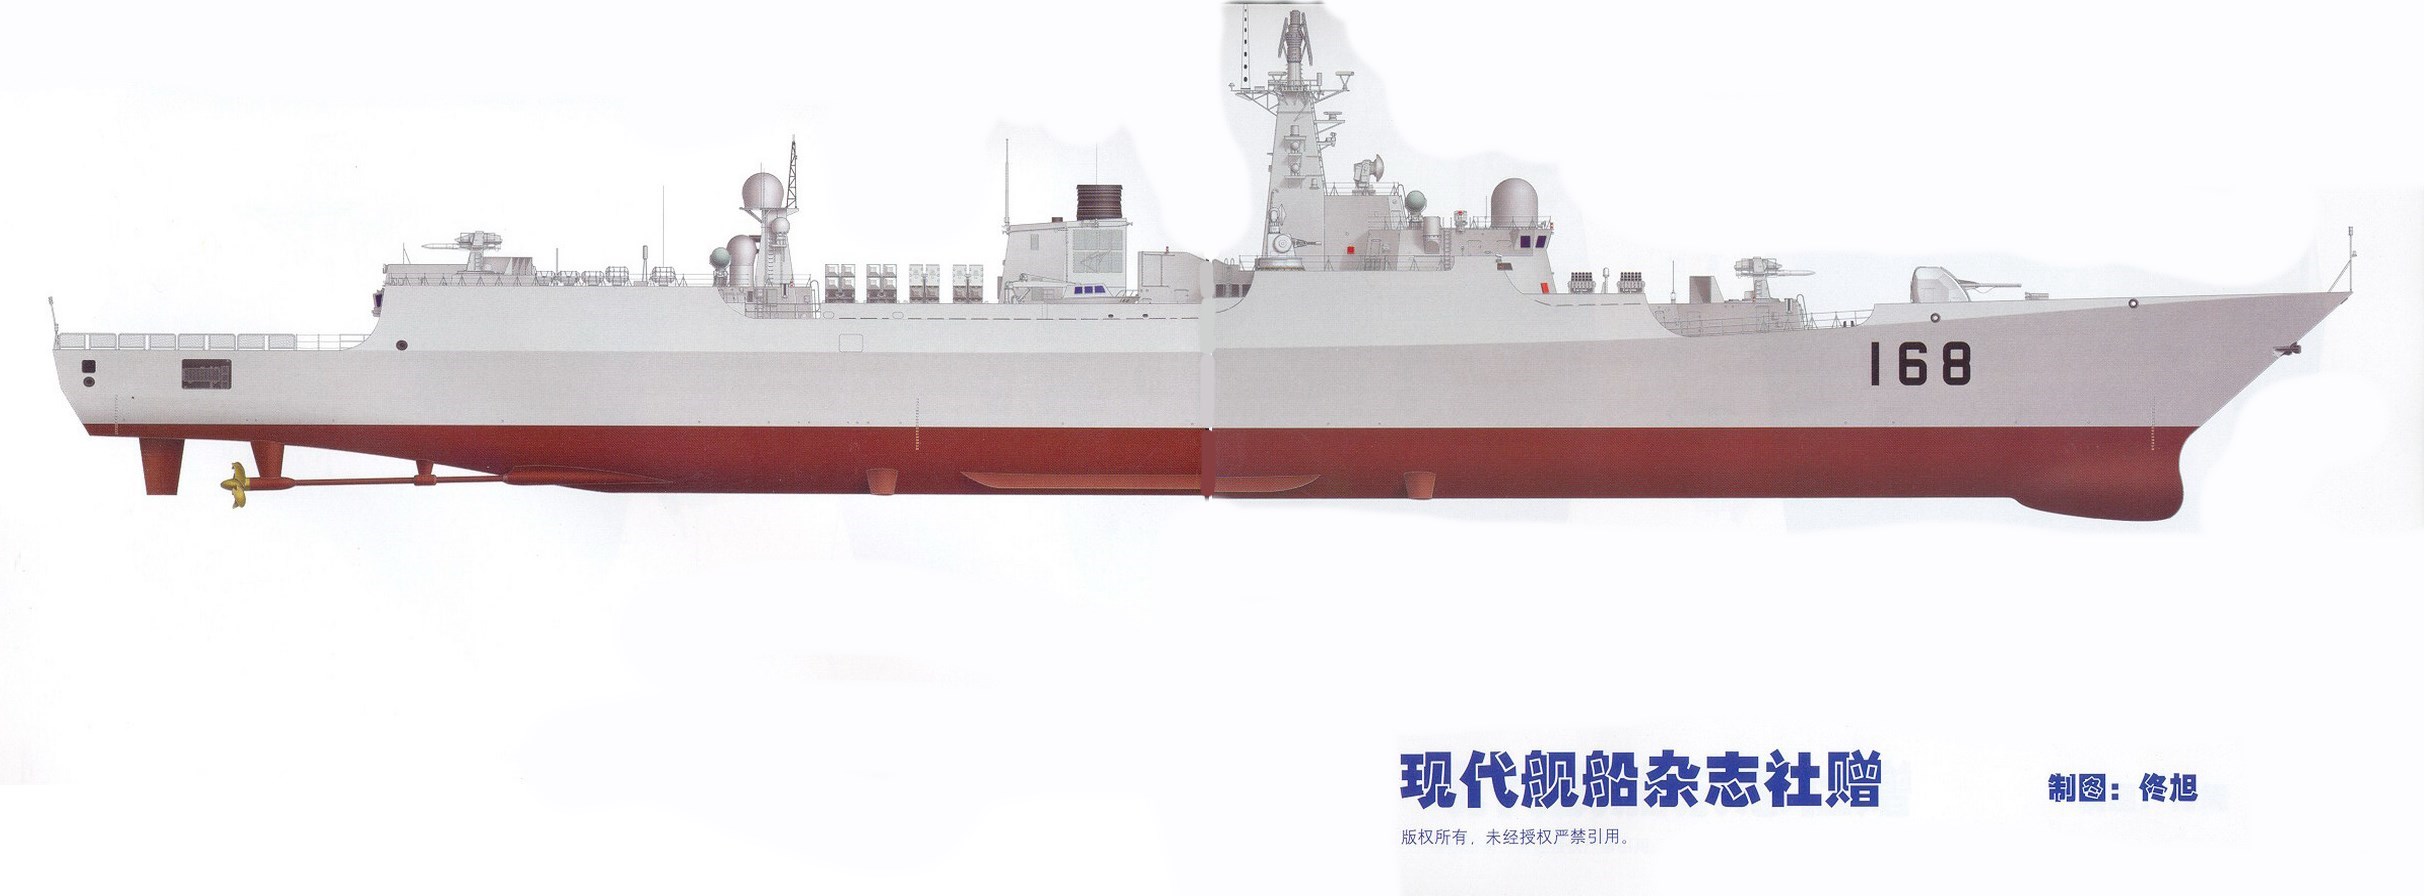 1706455452 77 Type 052B or Guangzhou Class Destroyer